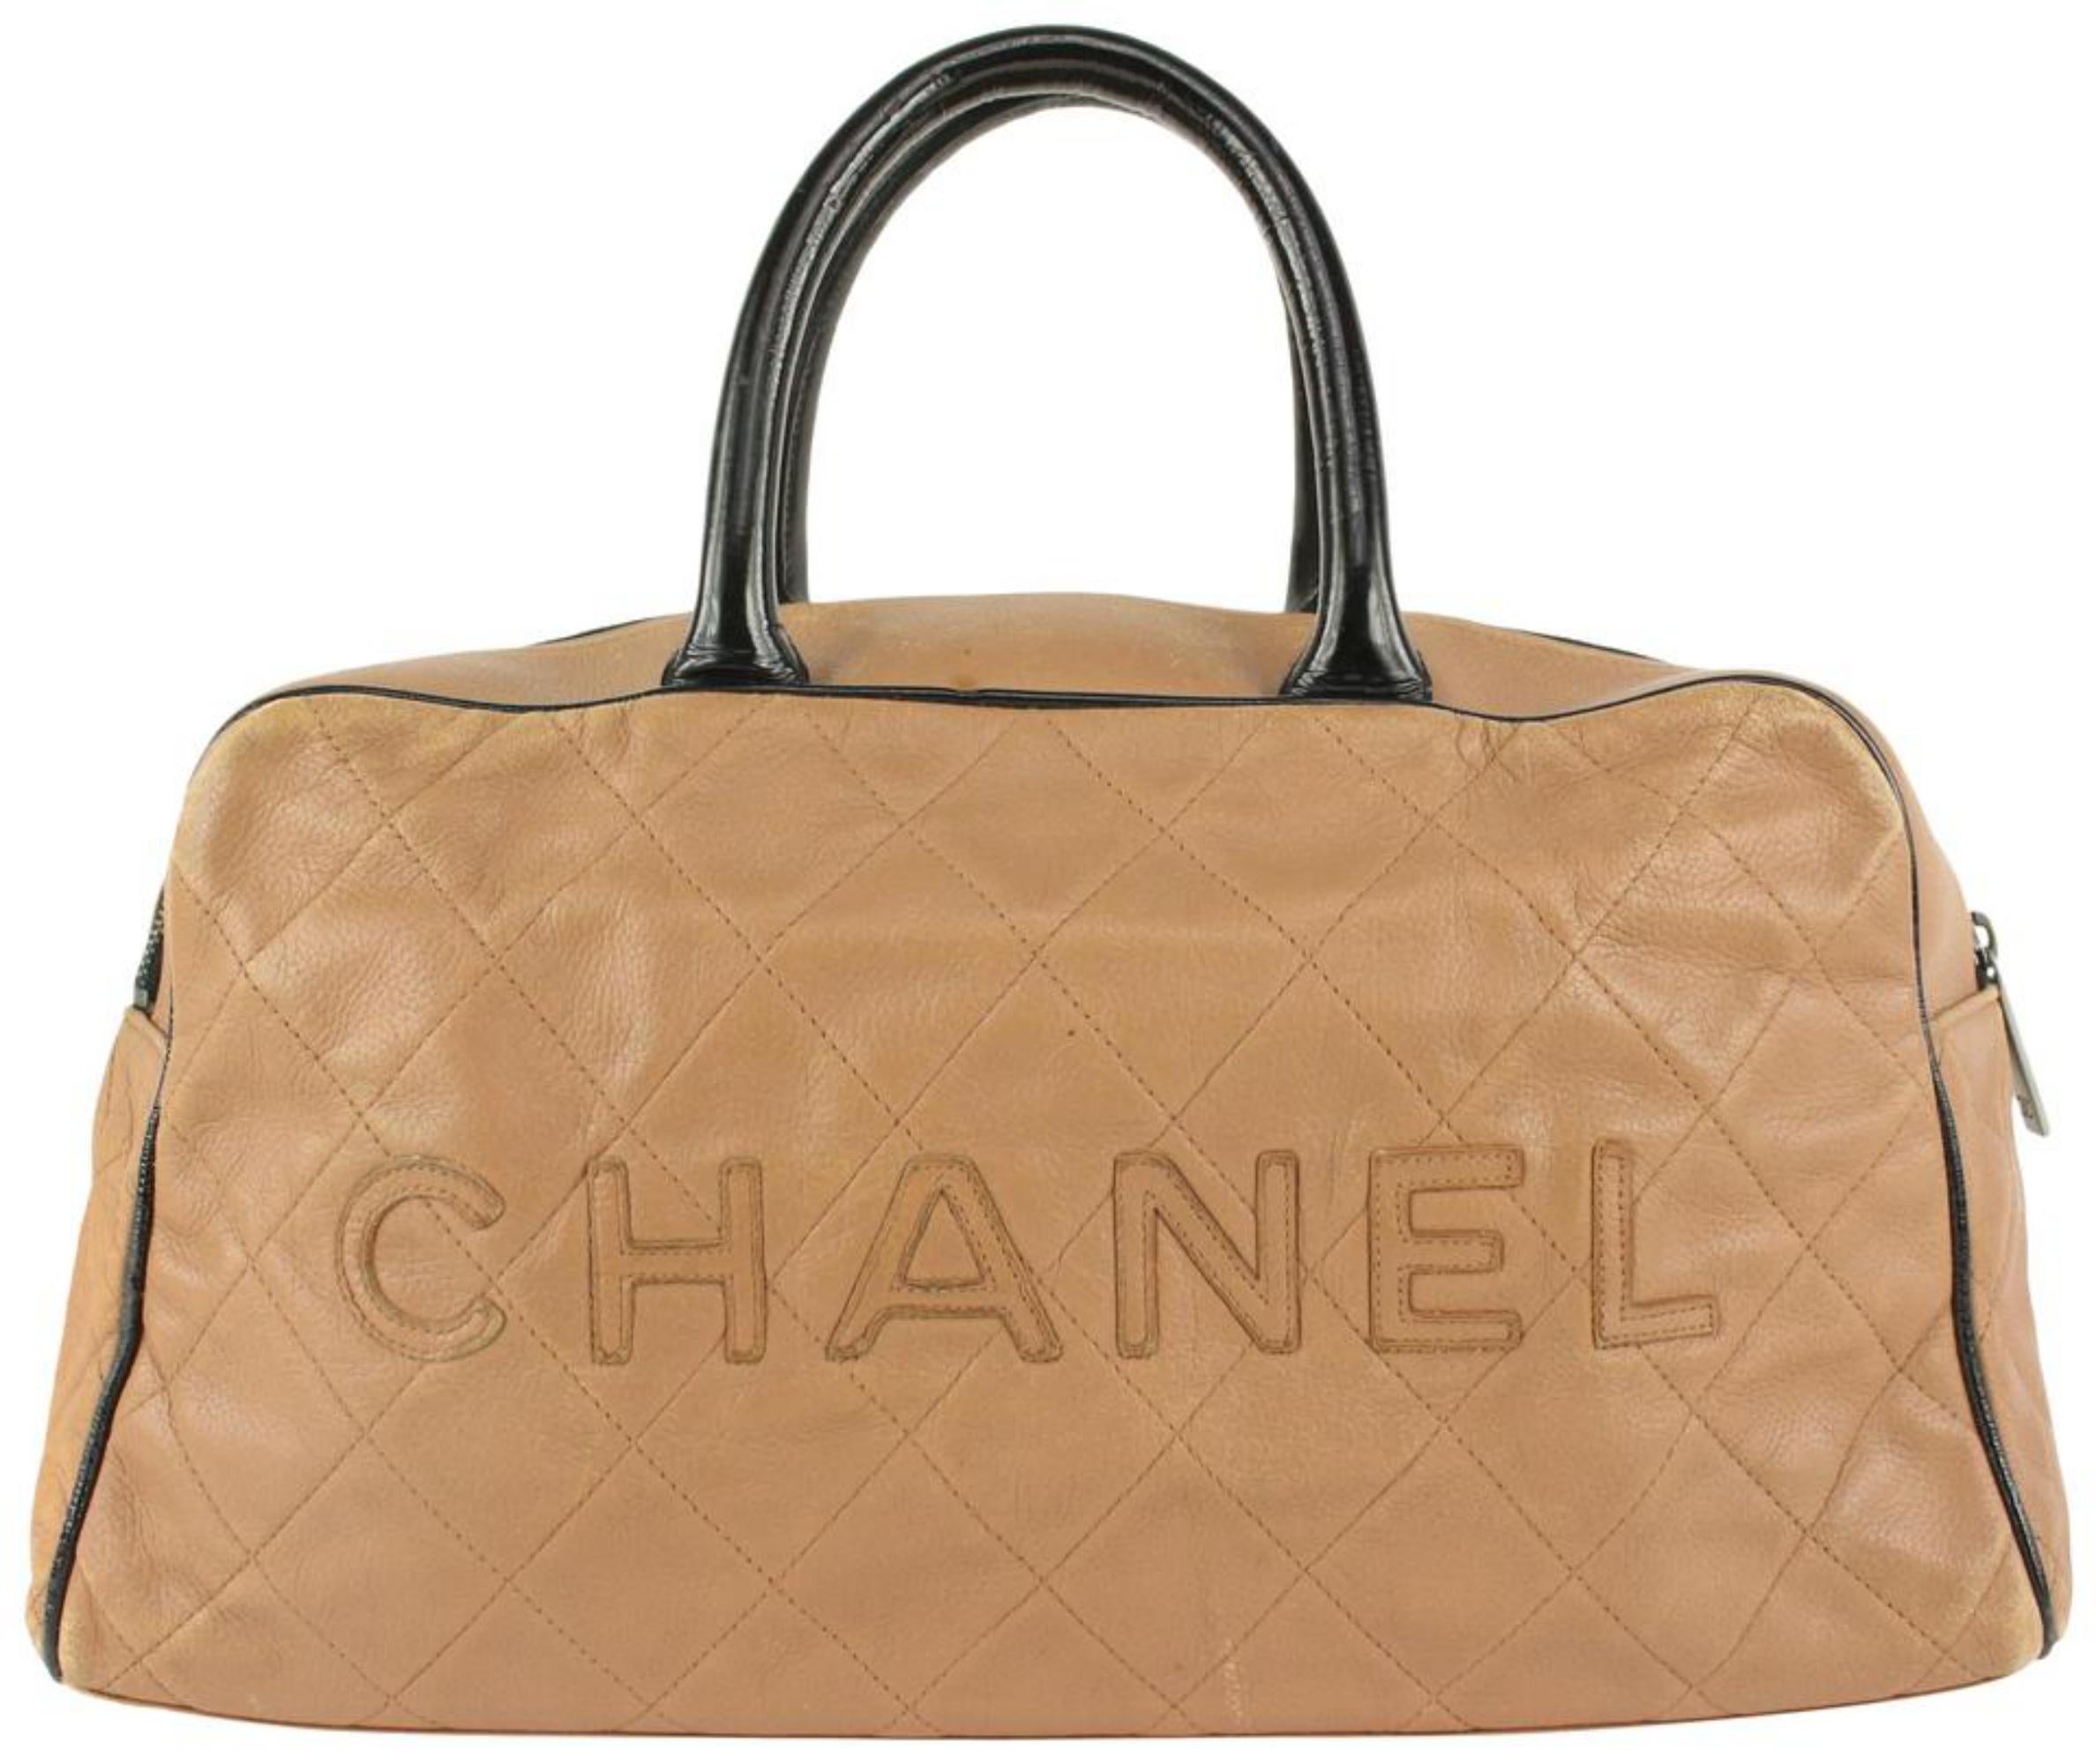 Chanel Black x Blush Pink Caviar Leather Bowler Boston Bag 1115c6 For Sale 7